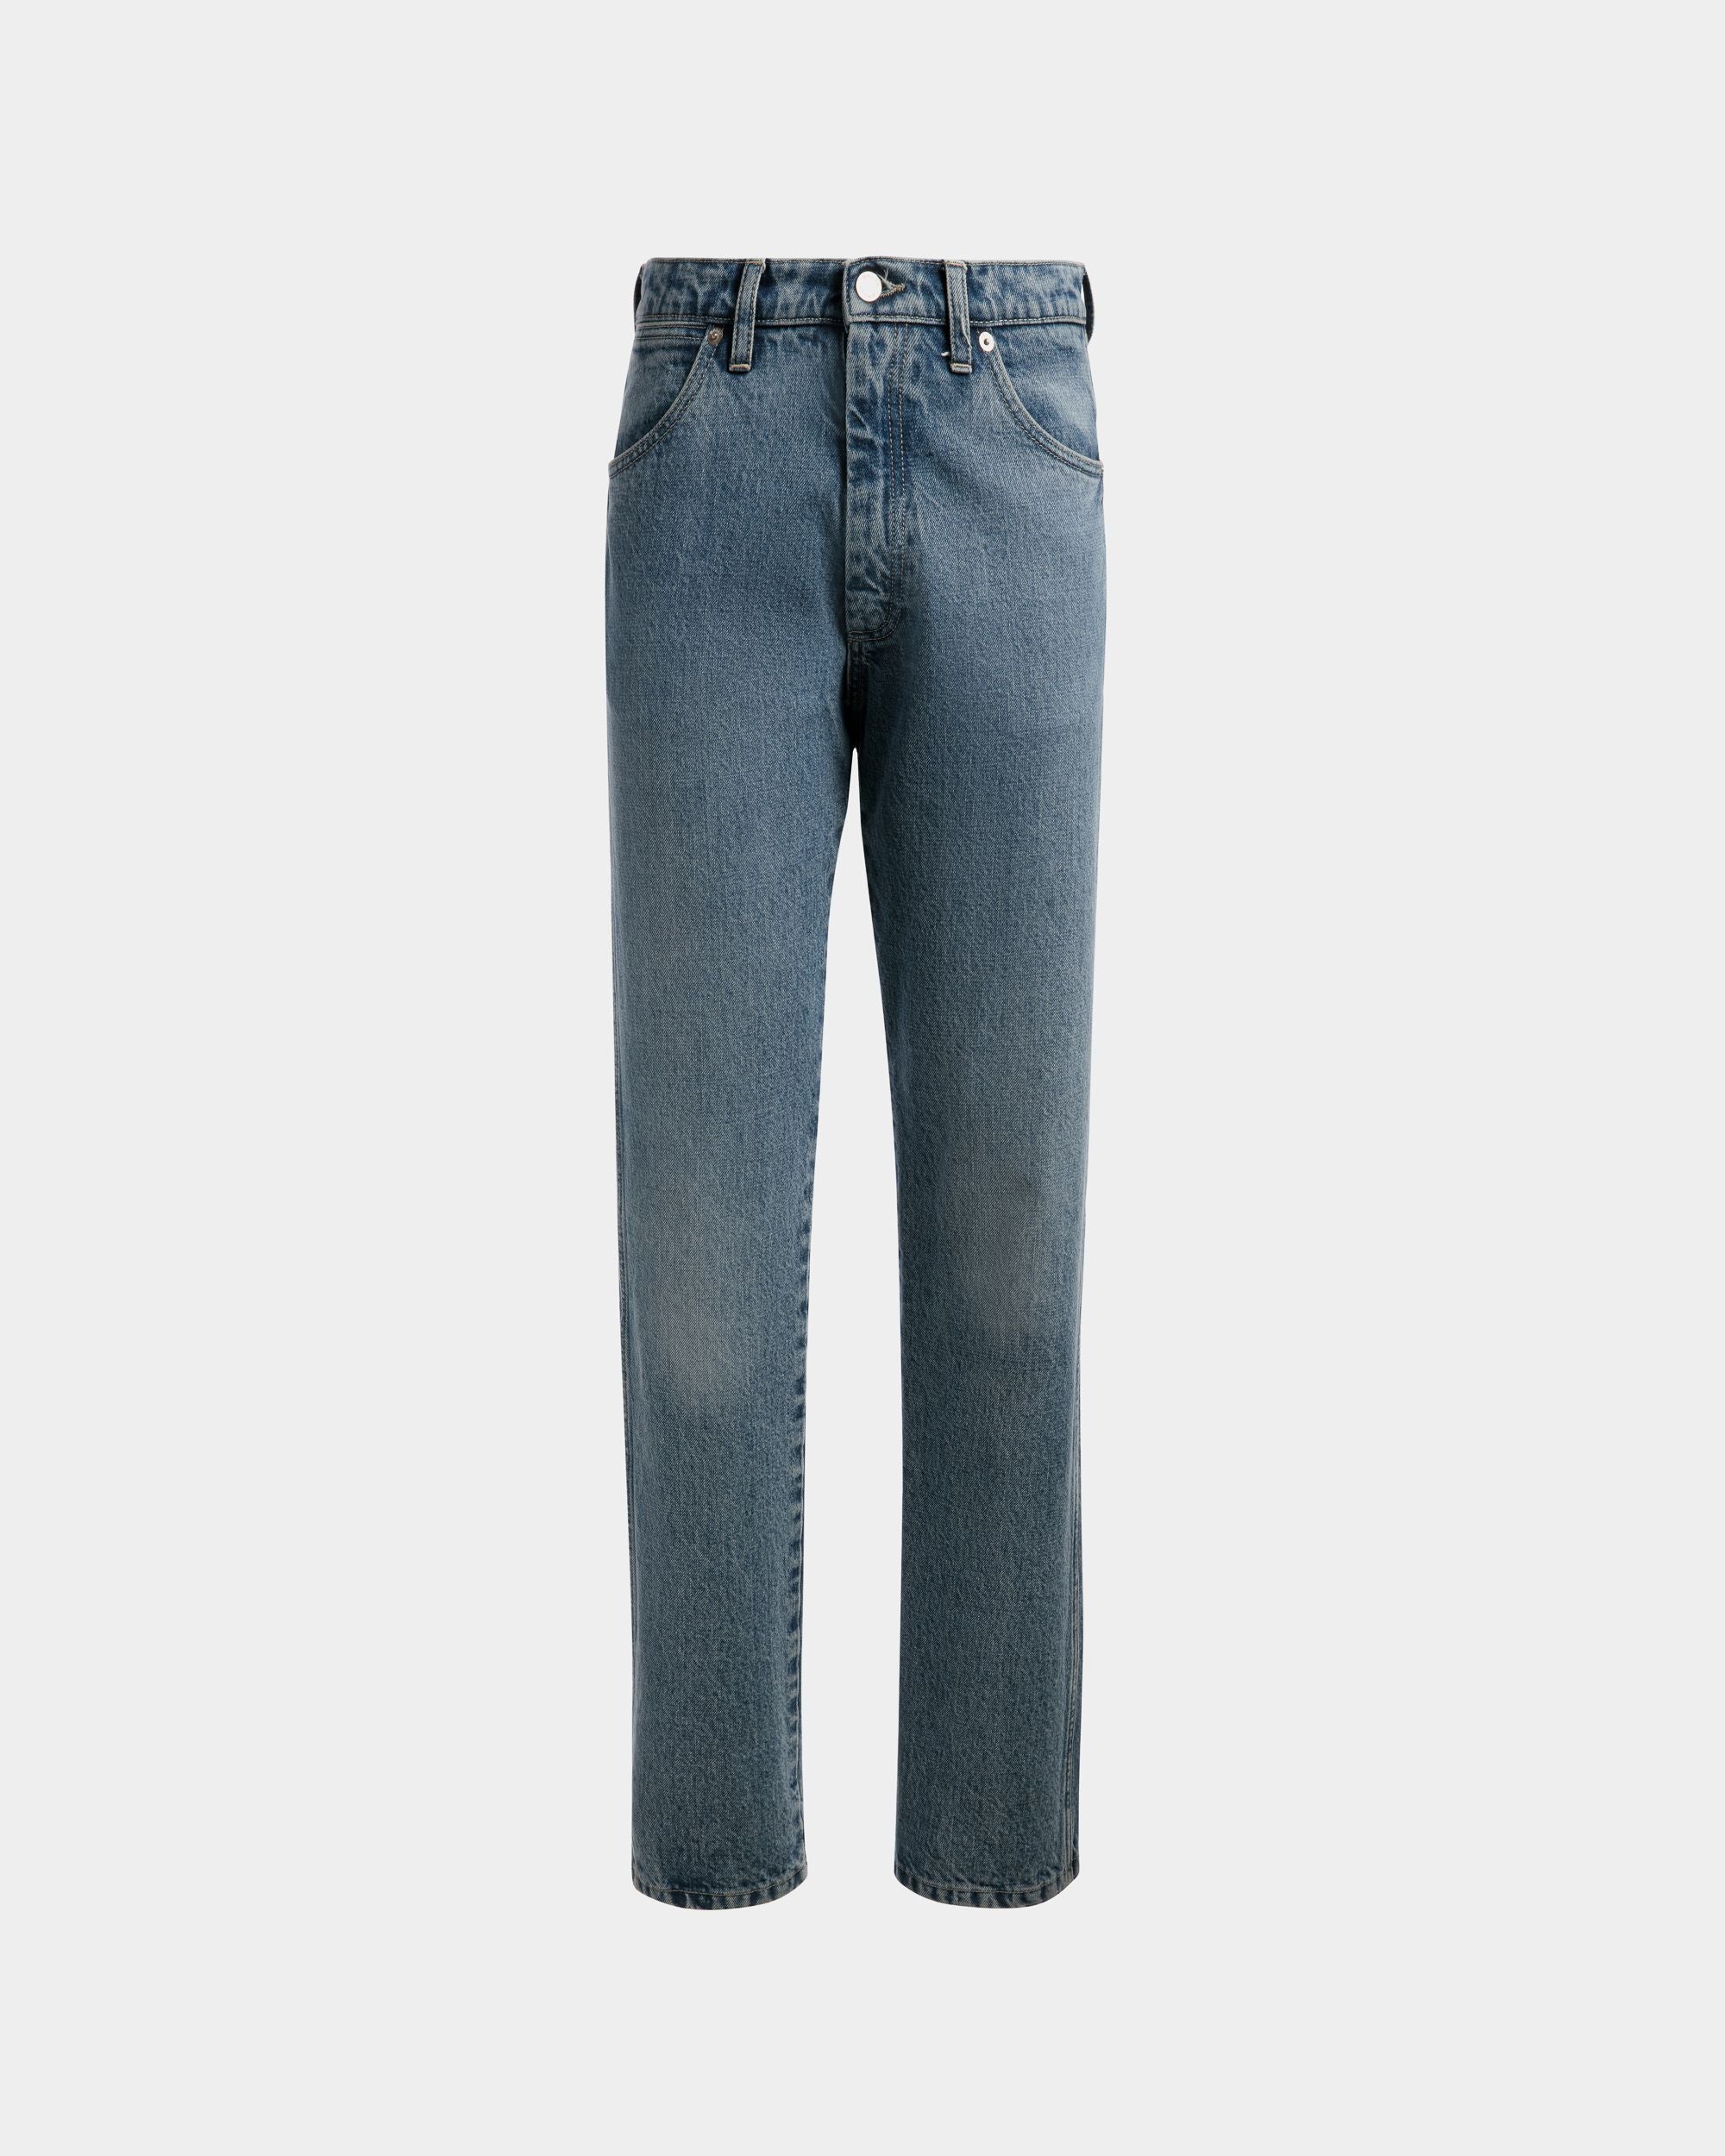 Men's Straight Jeans In Light Blue Denim | Bally | Still Life Front